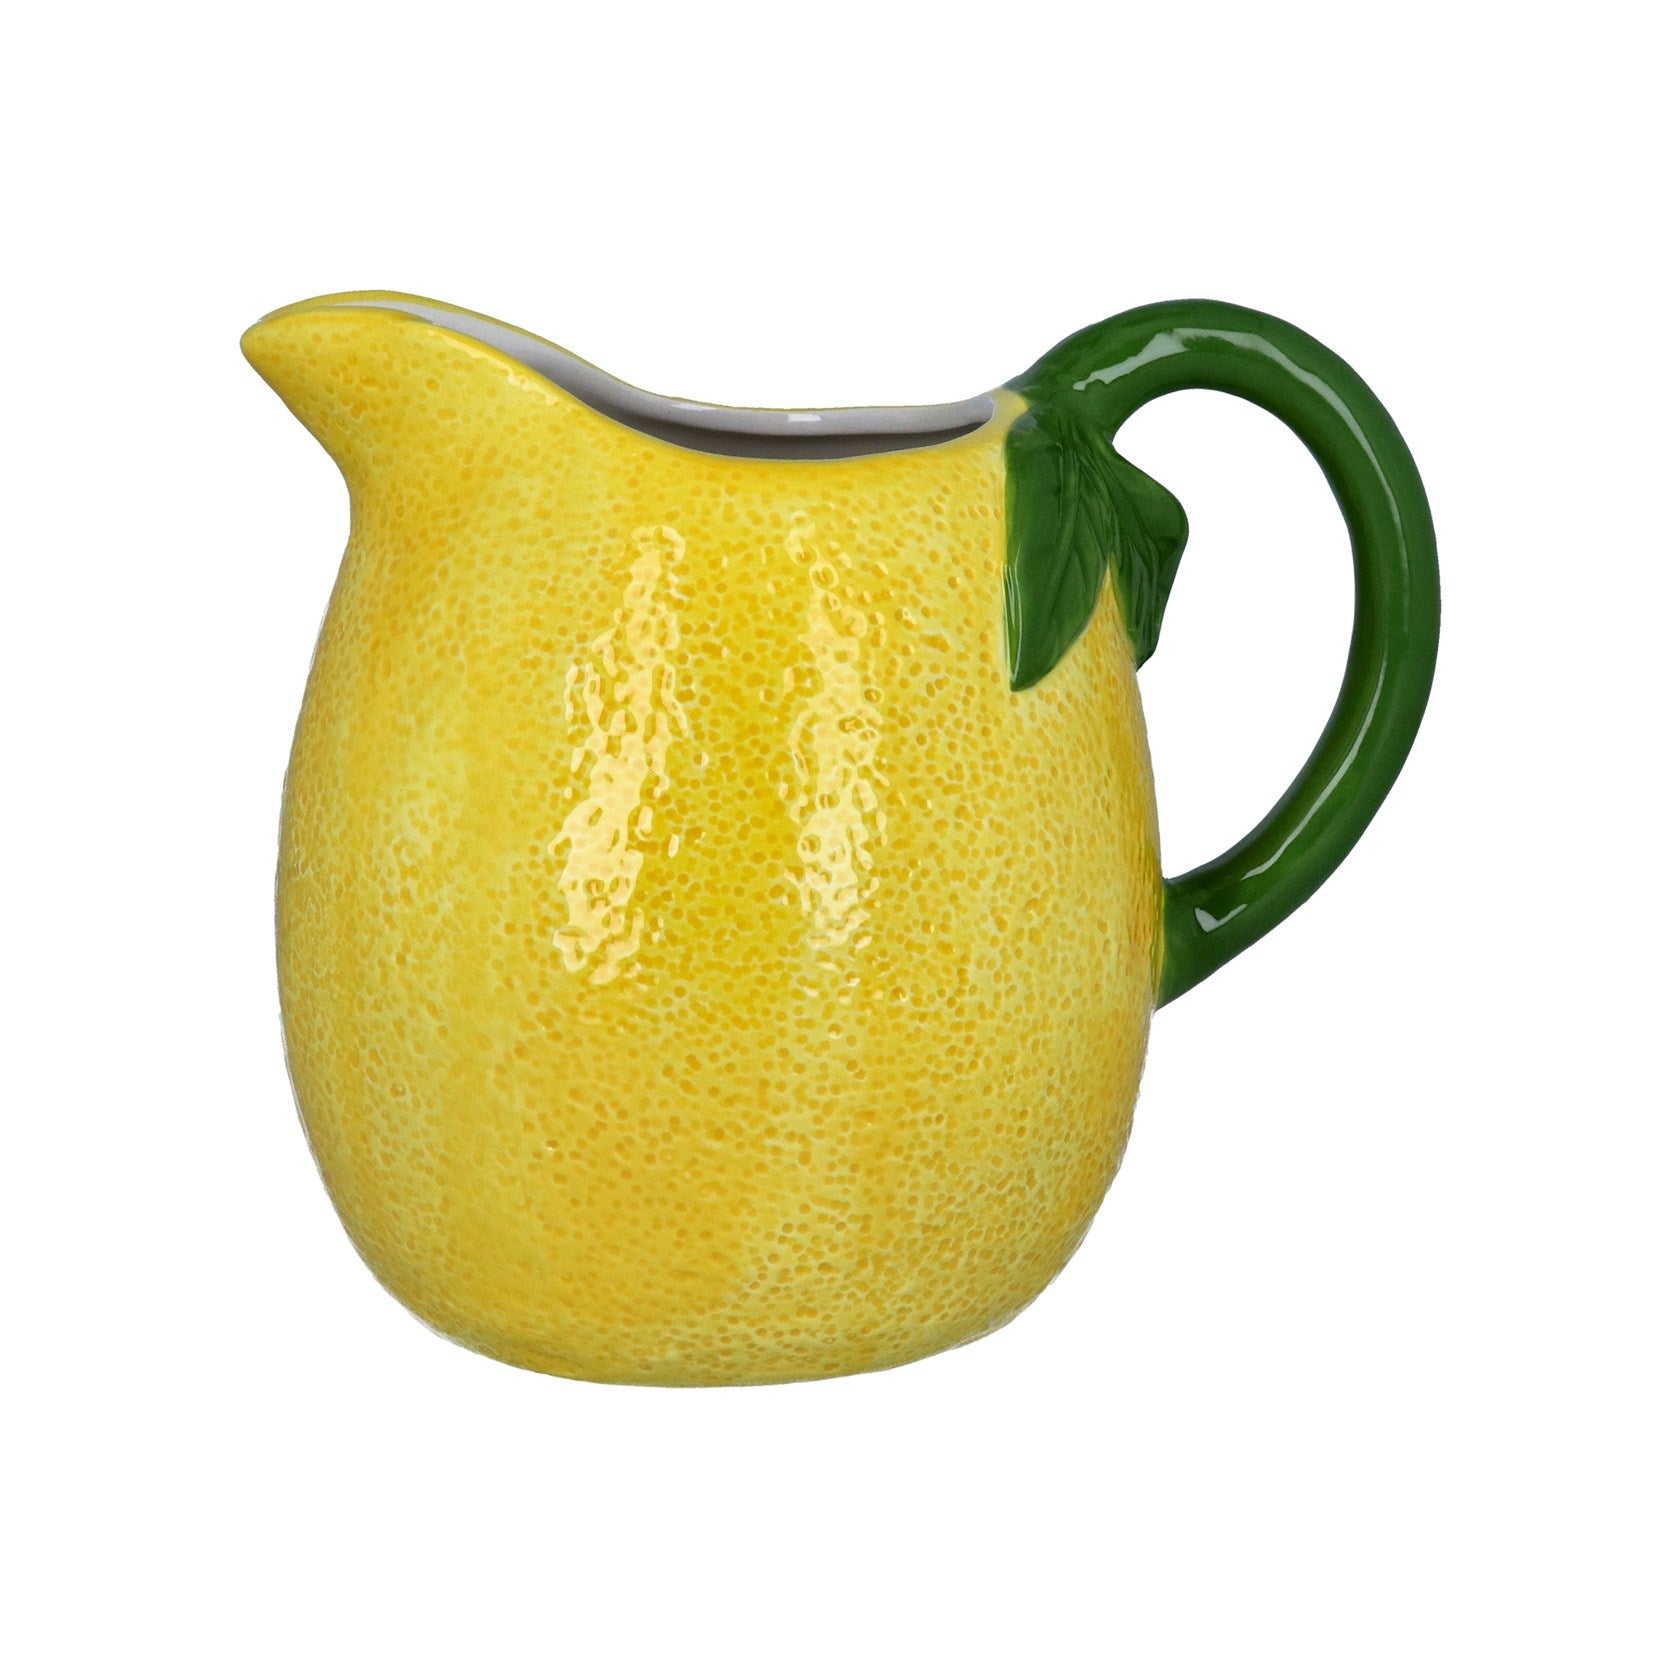 Ceramic Pitcher - Lemon Tree